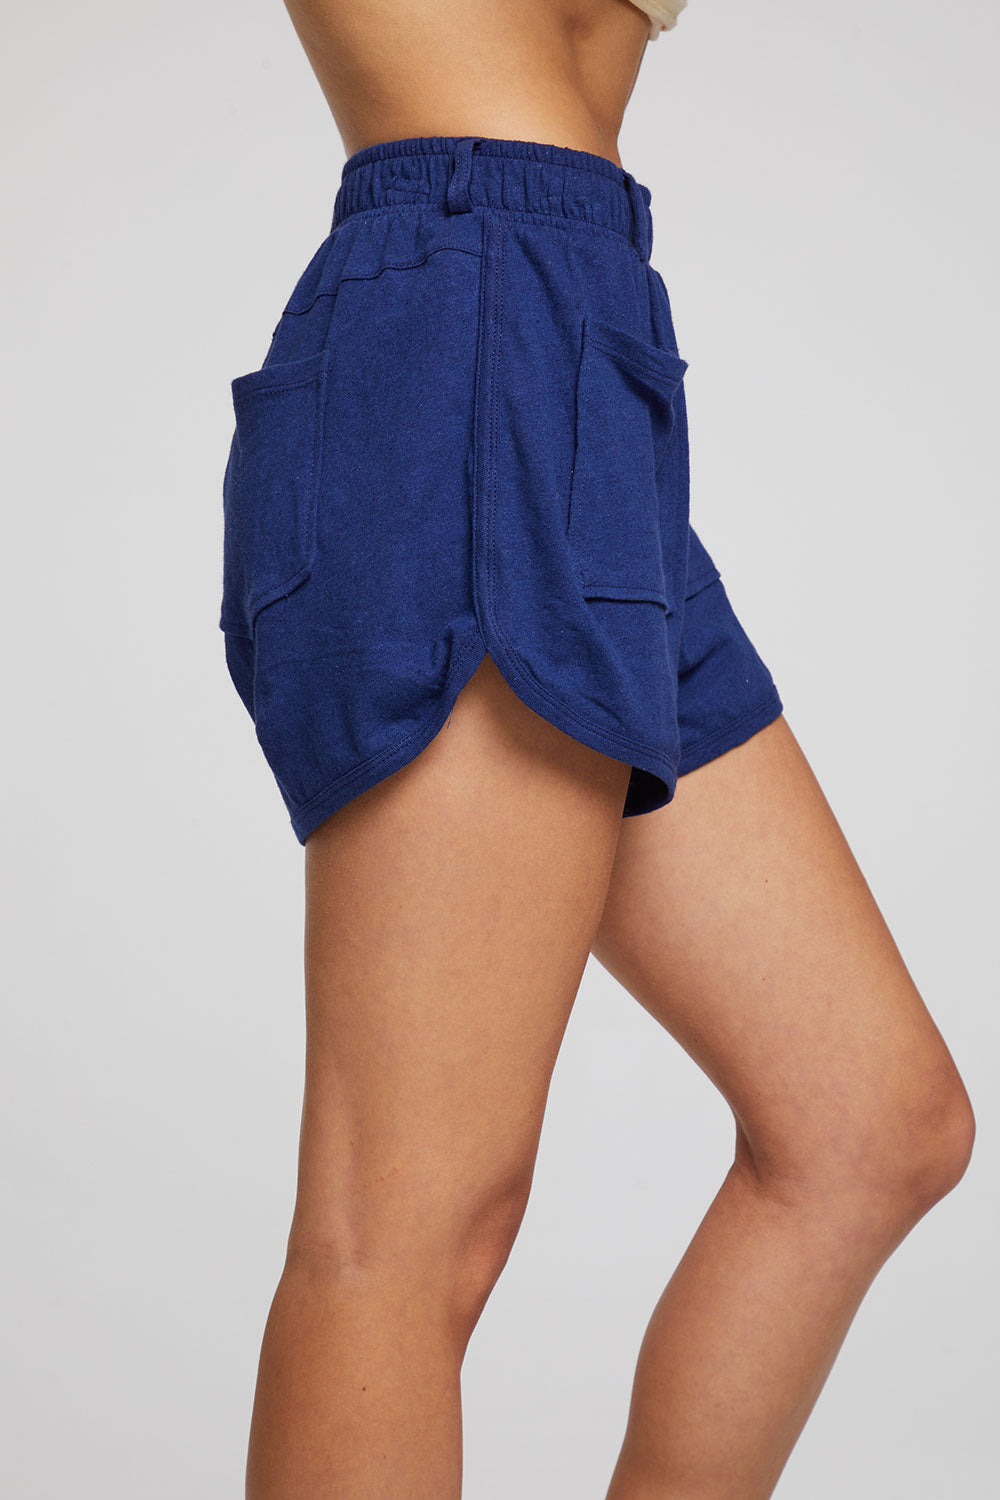 Cetara French Blue Shorts WOMENS chaserbrand